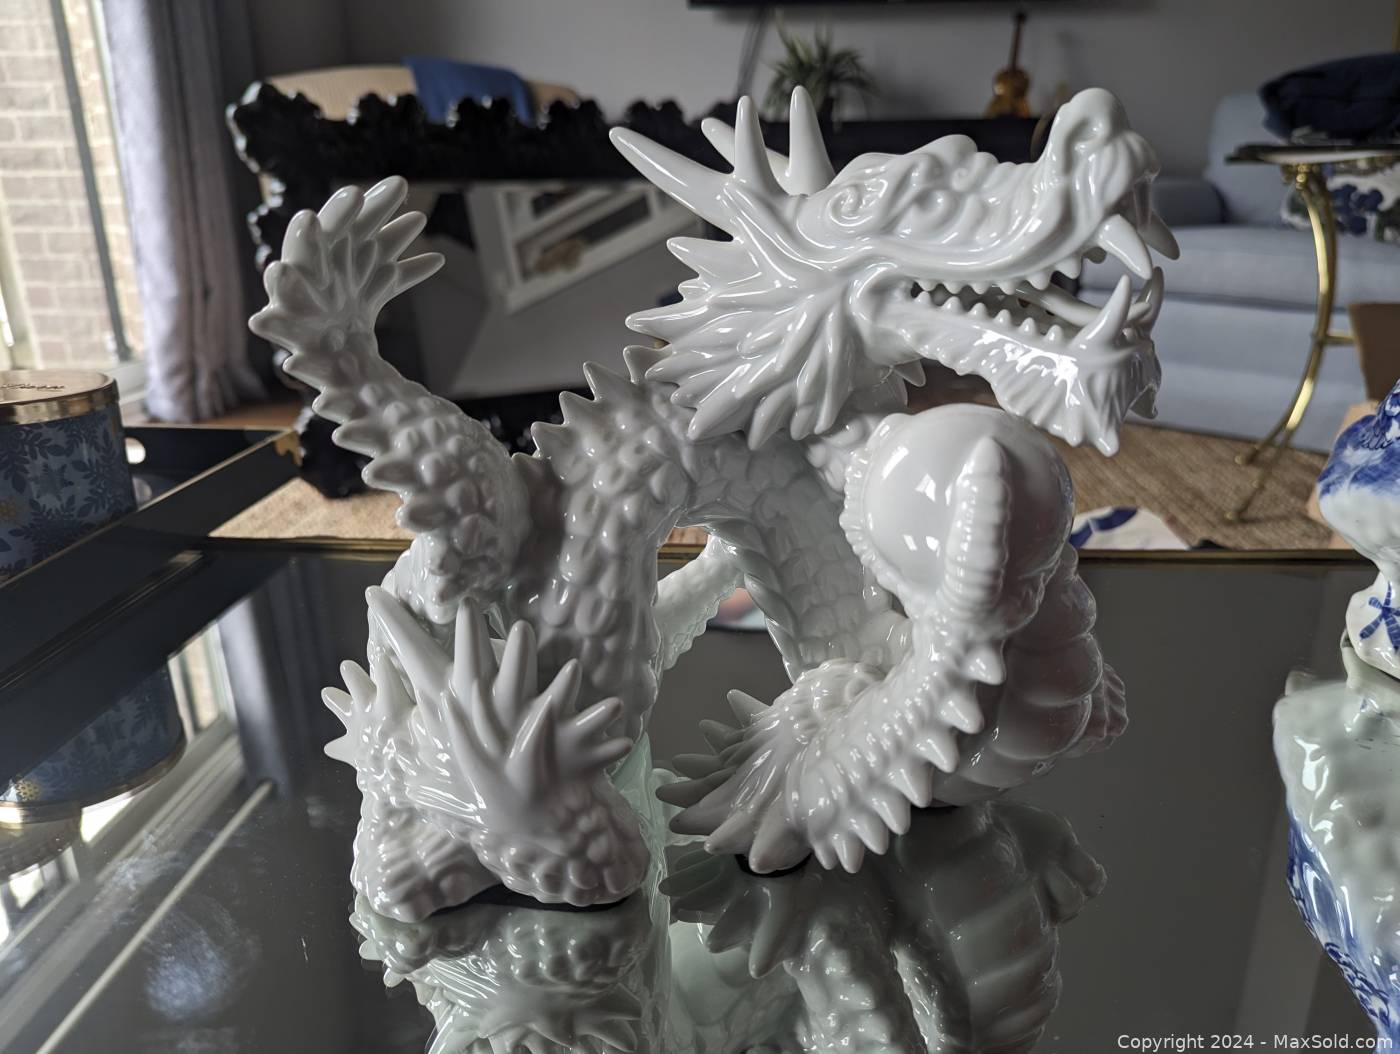 Sold at Auction: Fitz & Floyd Porcelain Dragon Figurine